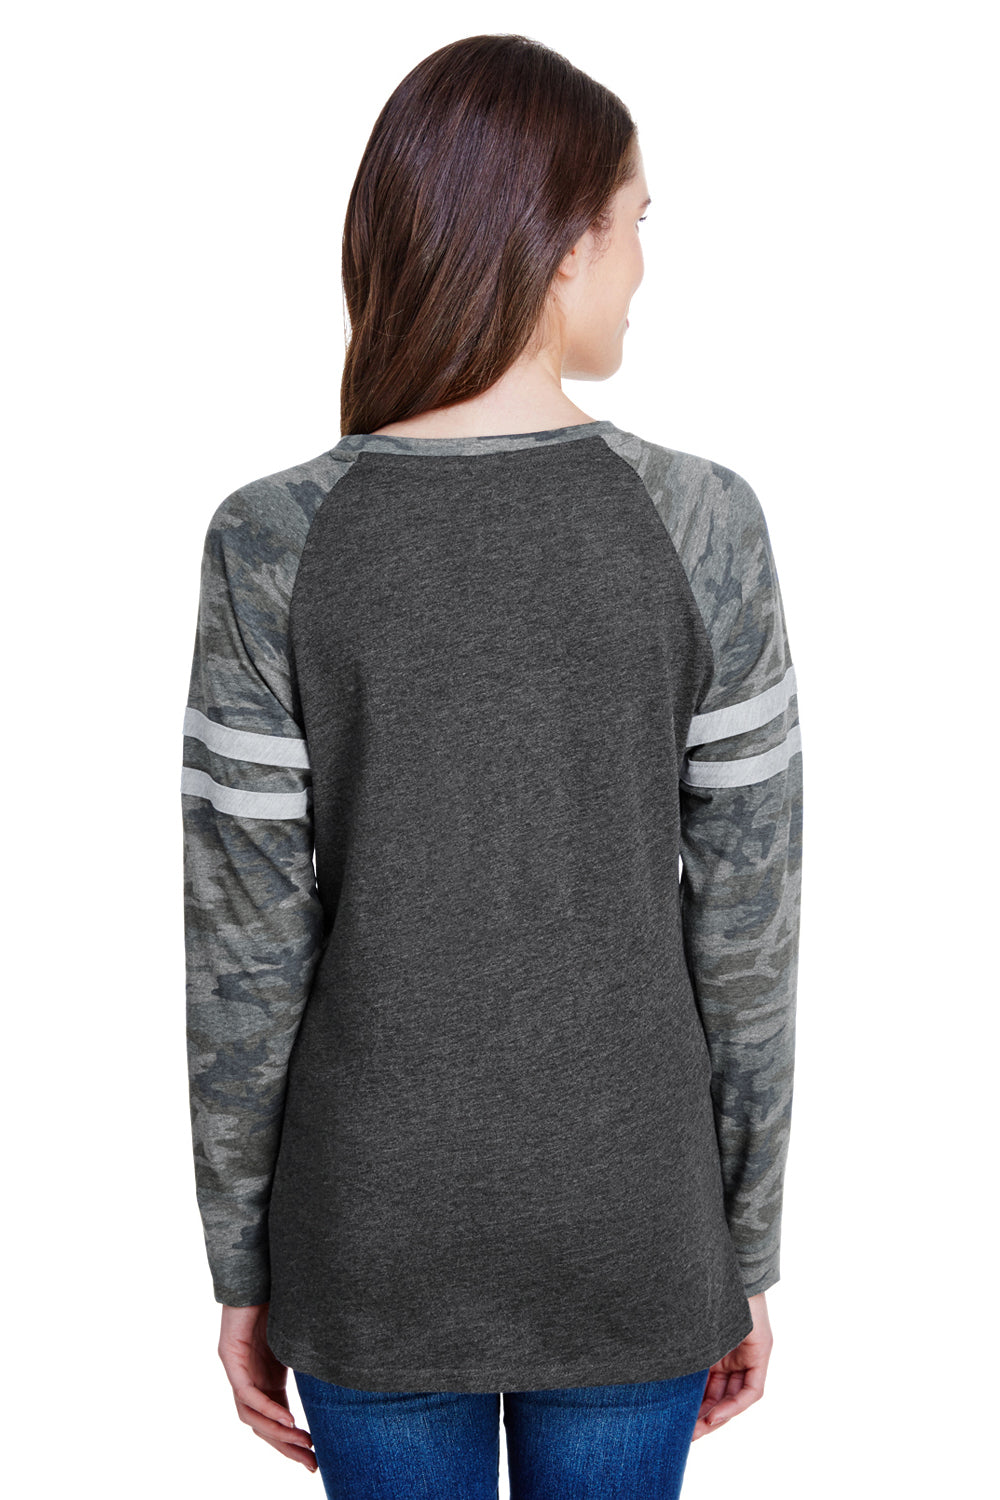 LAT 3534 Womens Gameday Mash Up Fine Jersey Long Sleeve V-Neck T-Shirt Vintage Smoke Grey/Camo Back